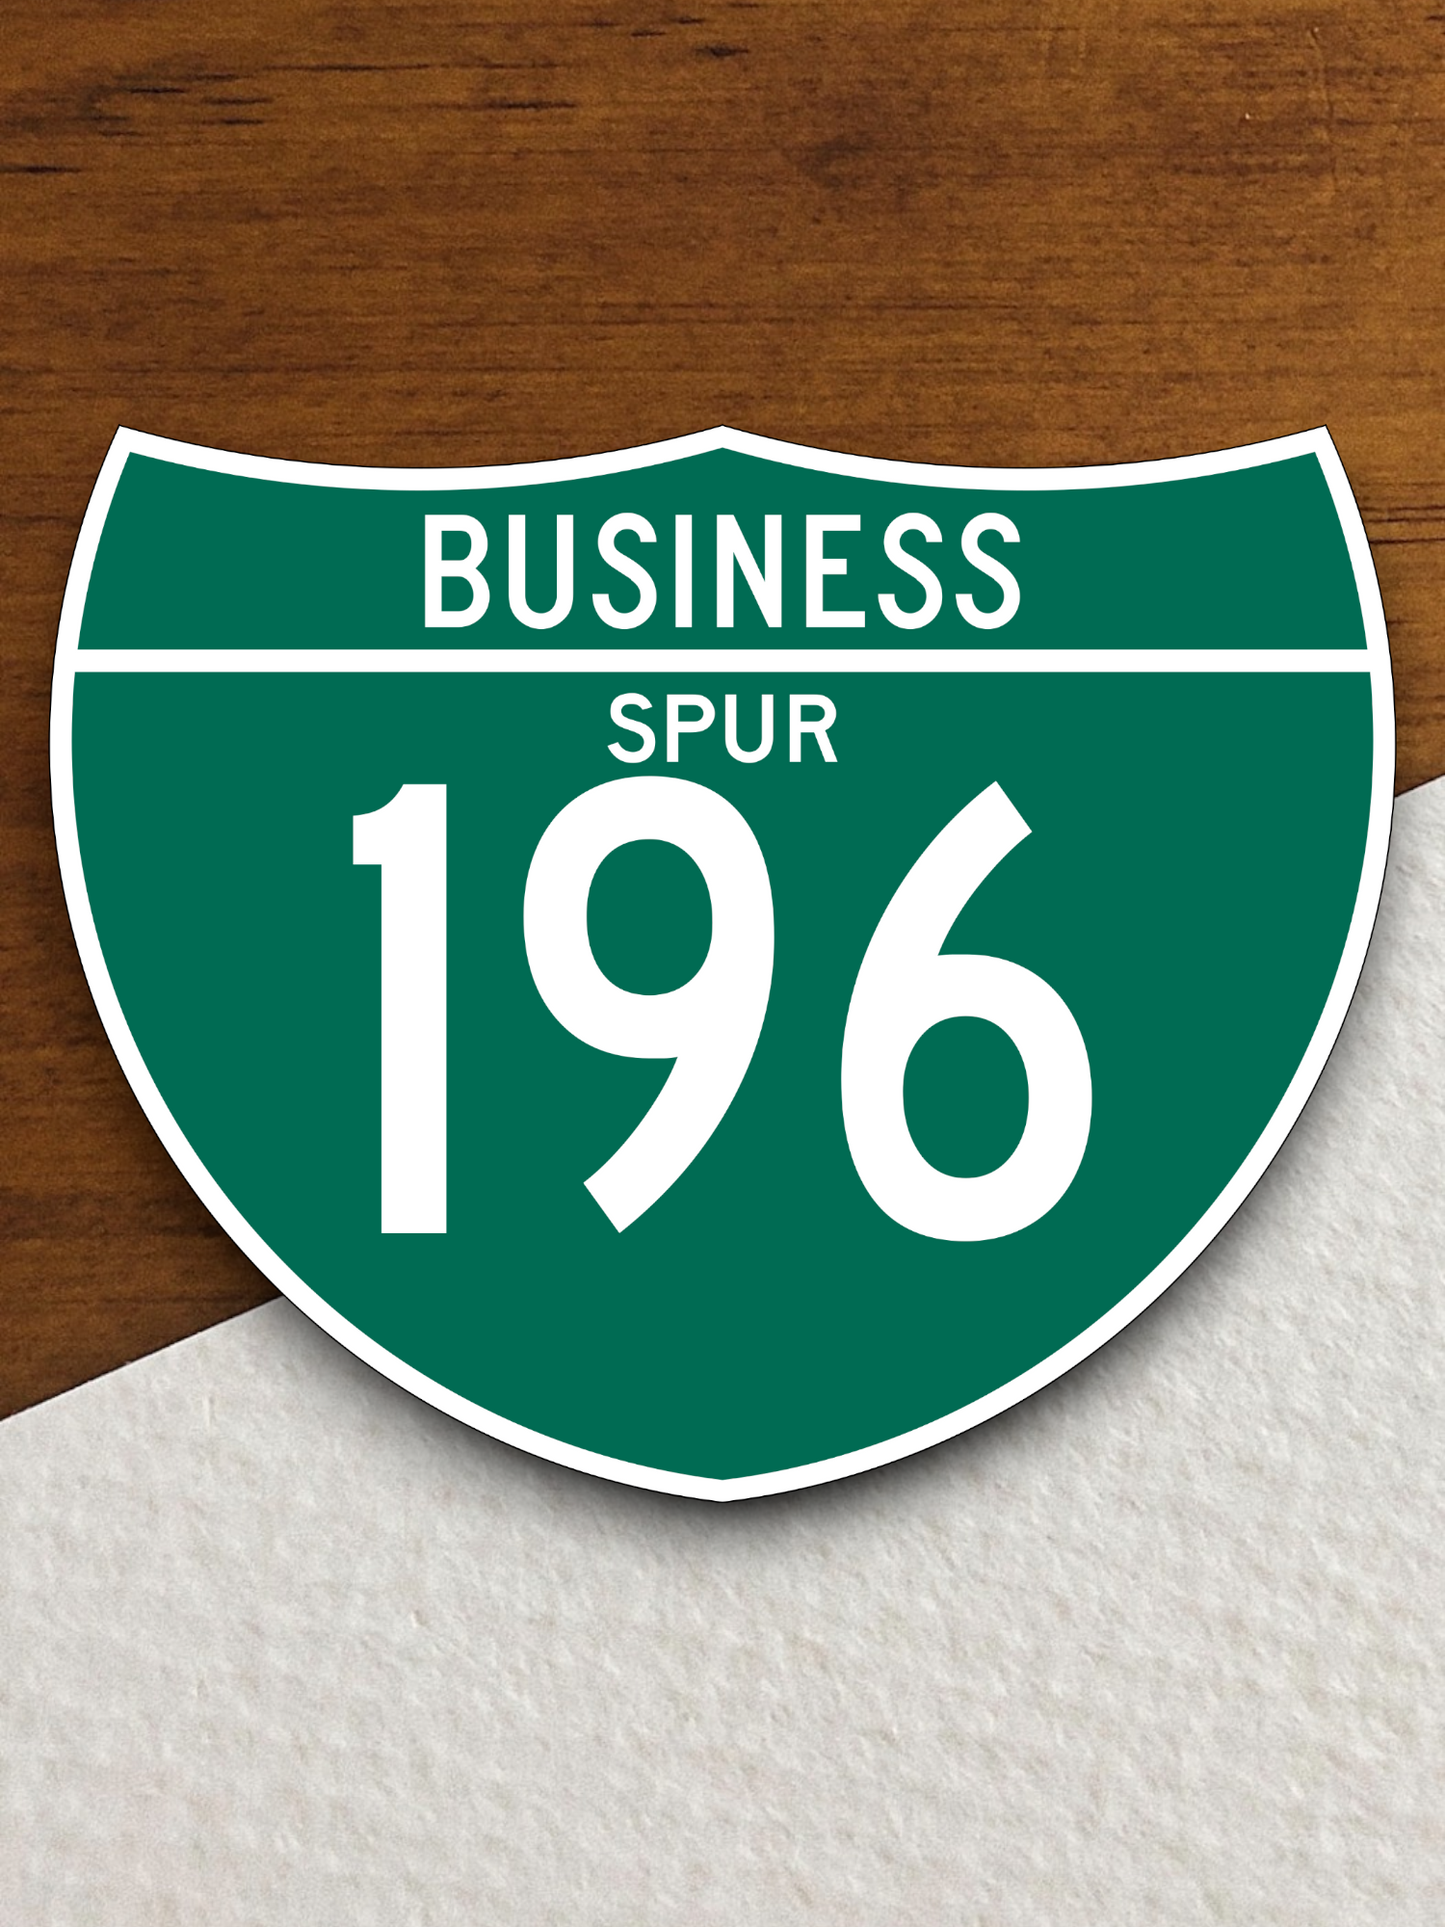 Business Spur 196 Road Sign Sticker